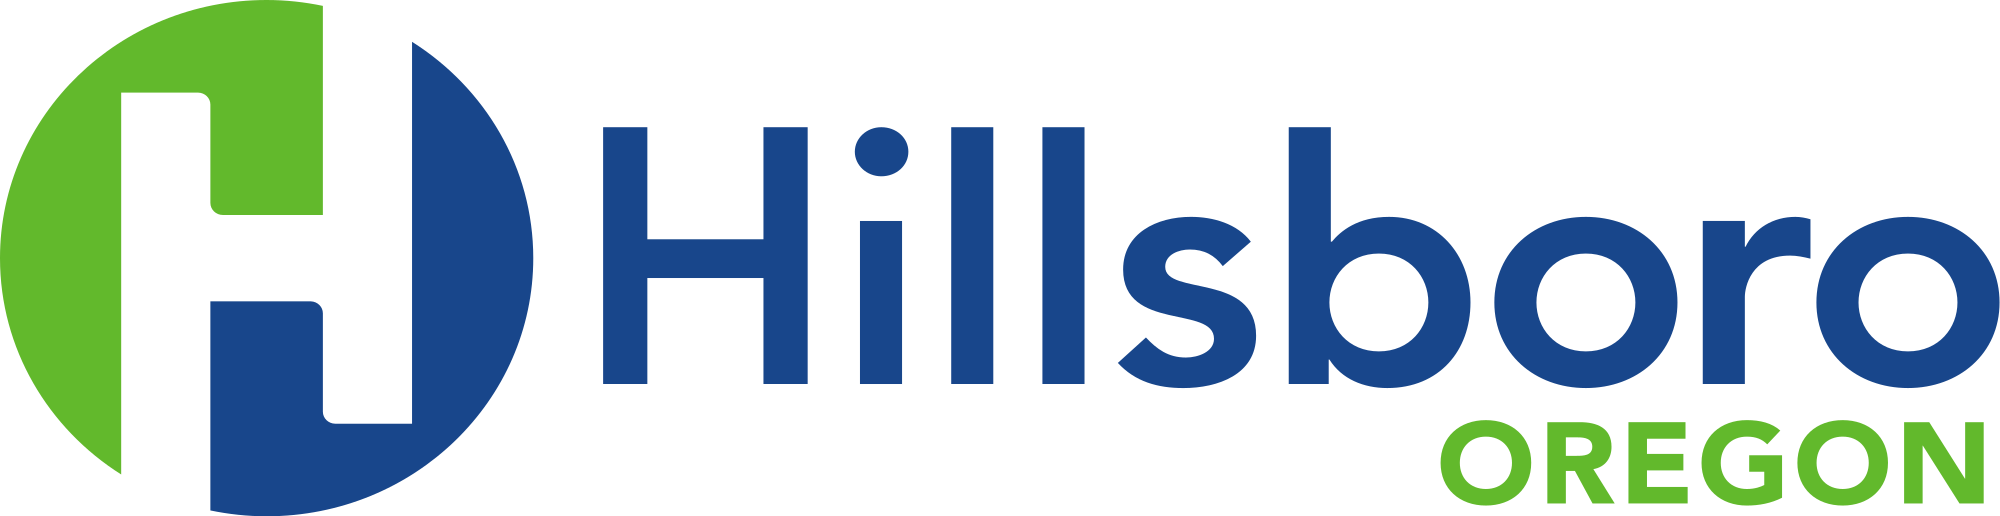 Hillsboro_OR_logo.svg.png